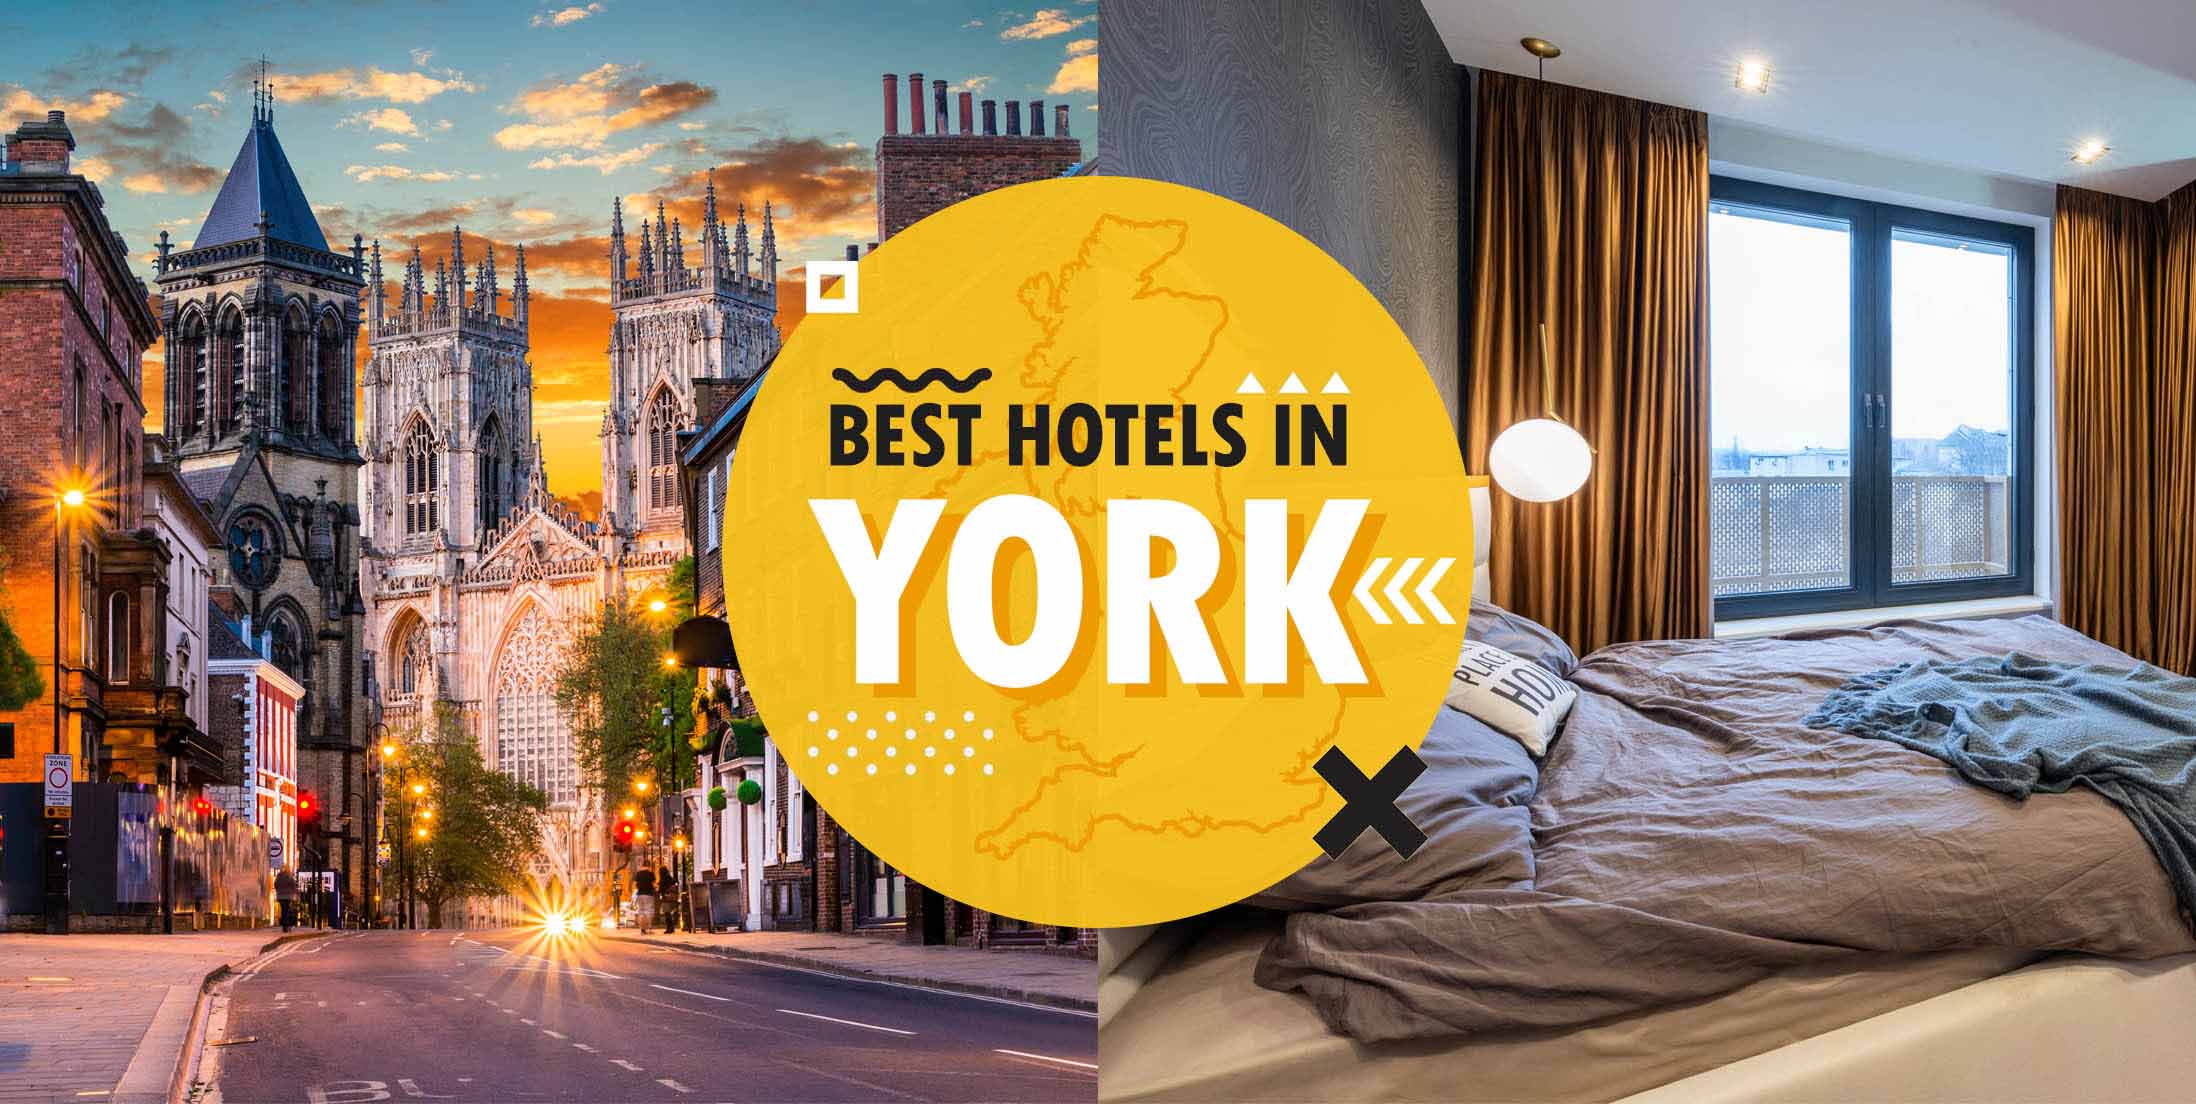 Best Hotels in York